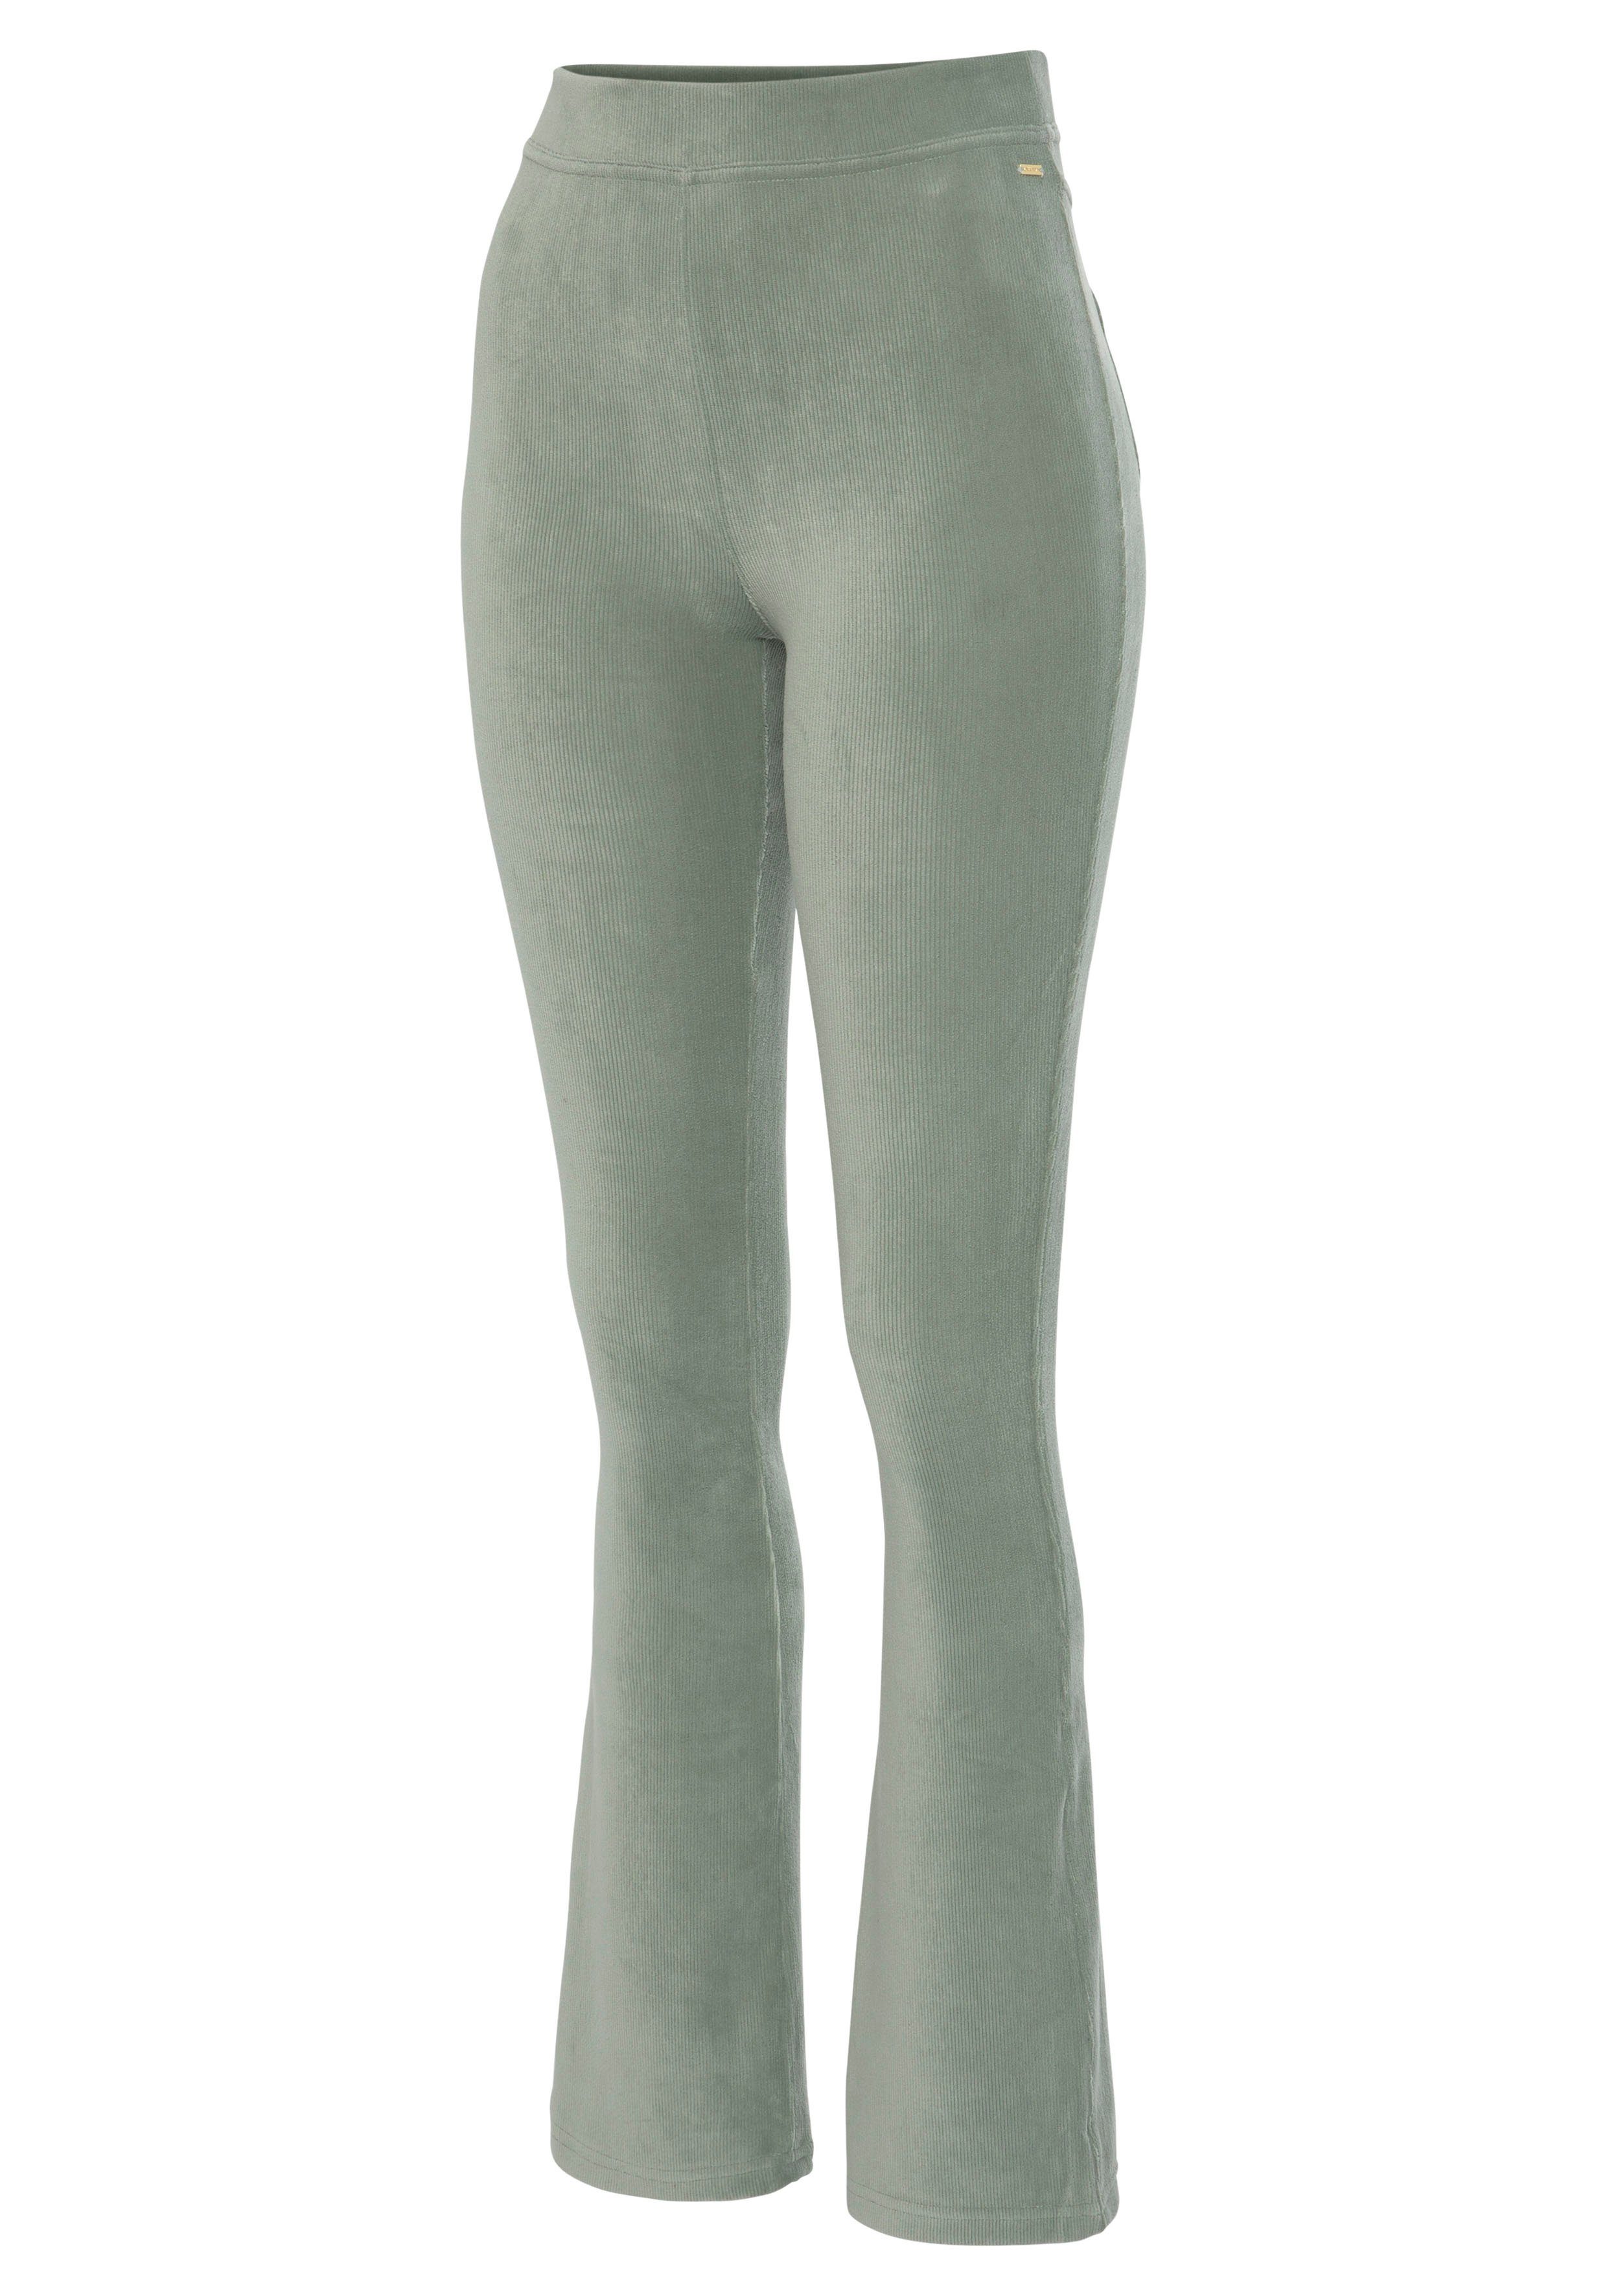 LASCANA Jazzpants mint aus Material Cord-Optik, in Loungewear grün weichem